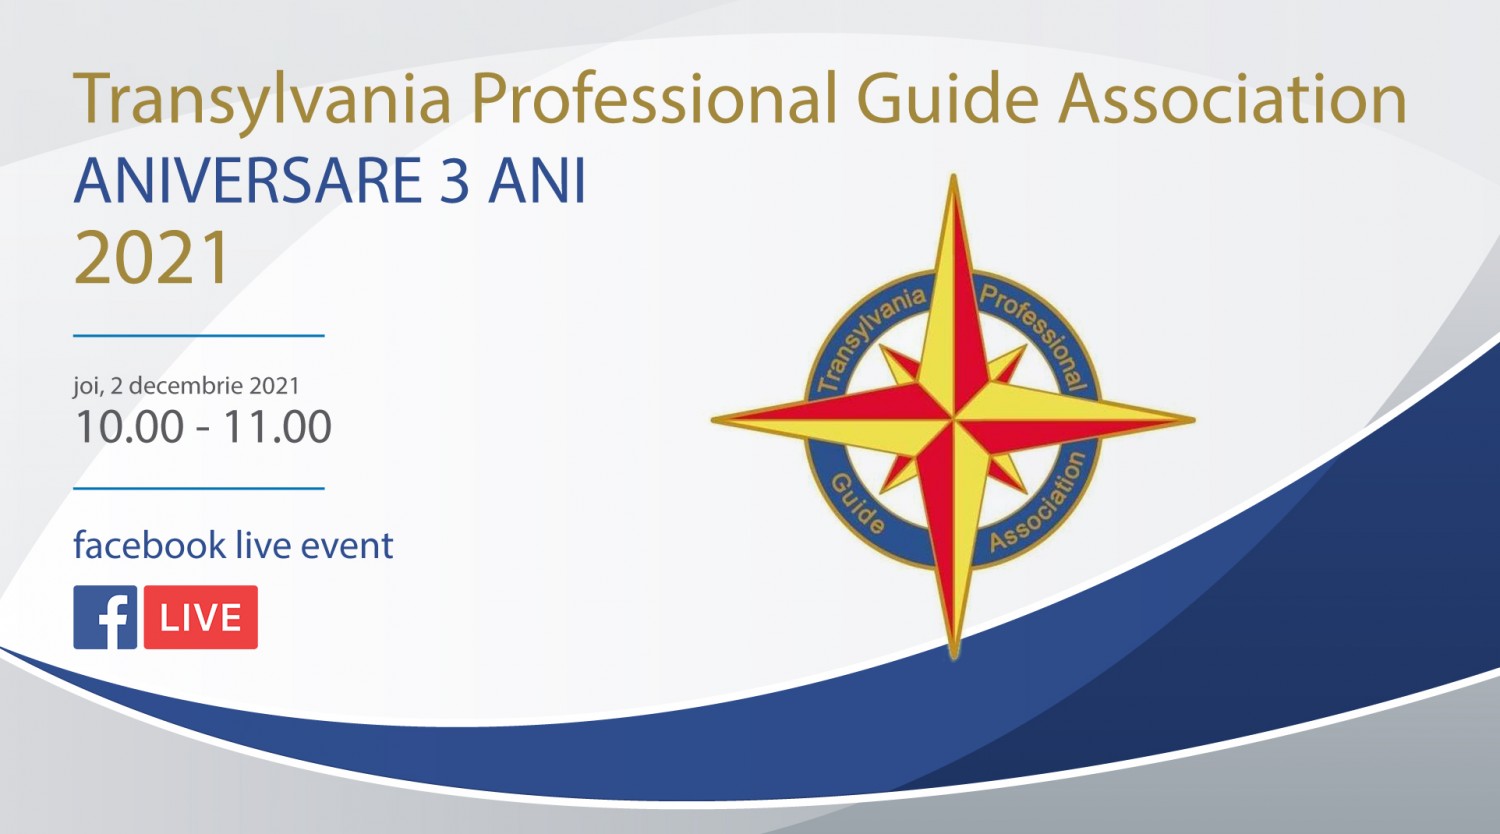 Aniversare Transylvania Professional Guide Association - 3 ani - ONLINE